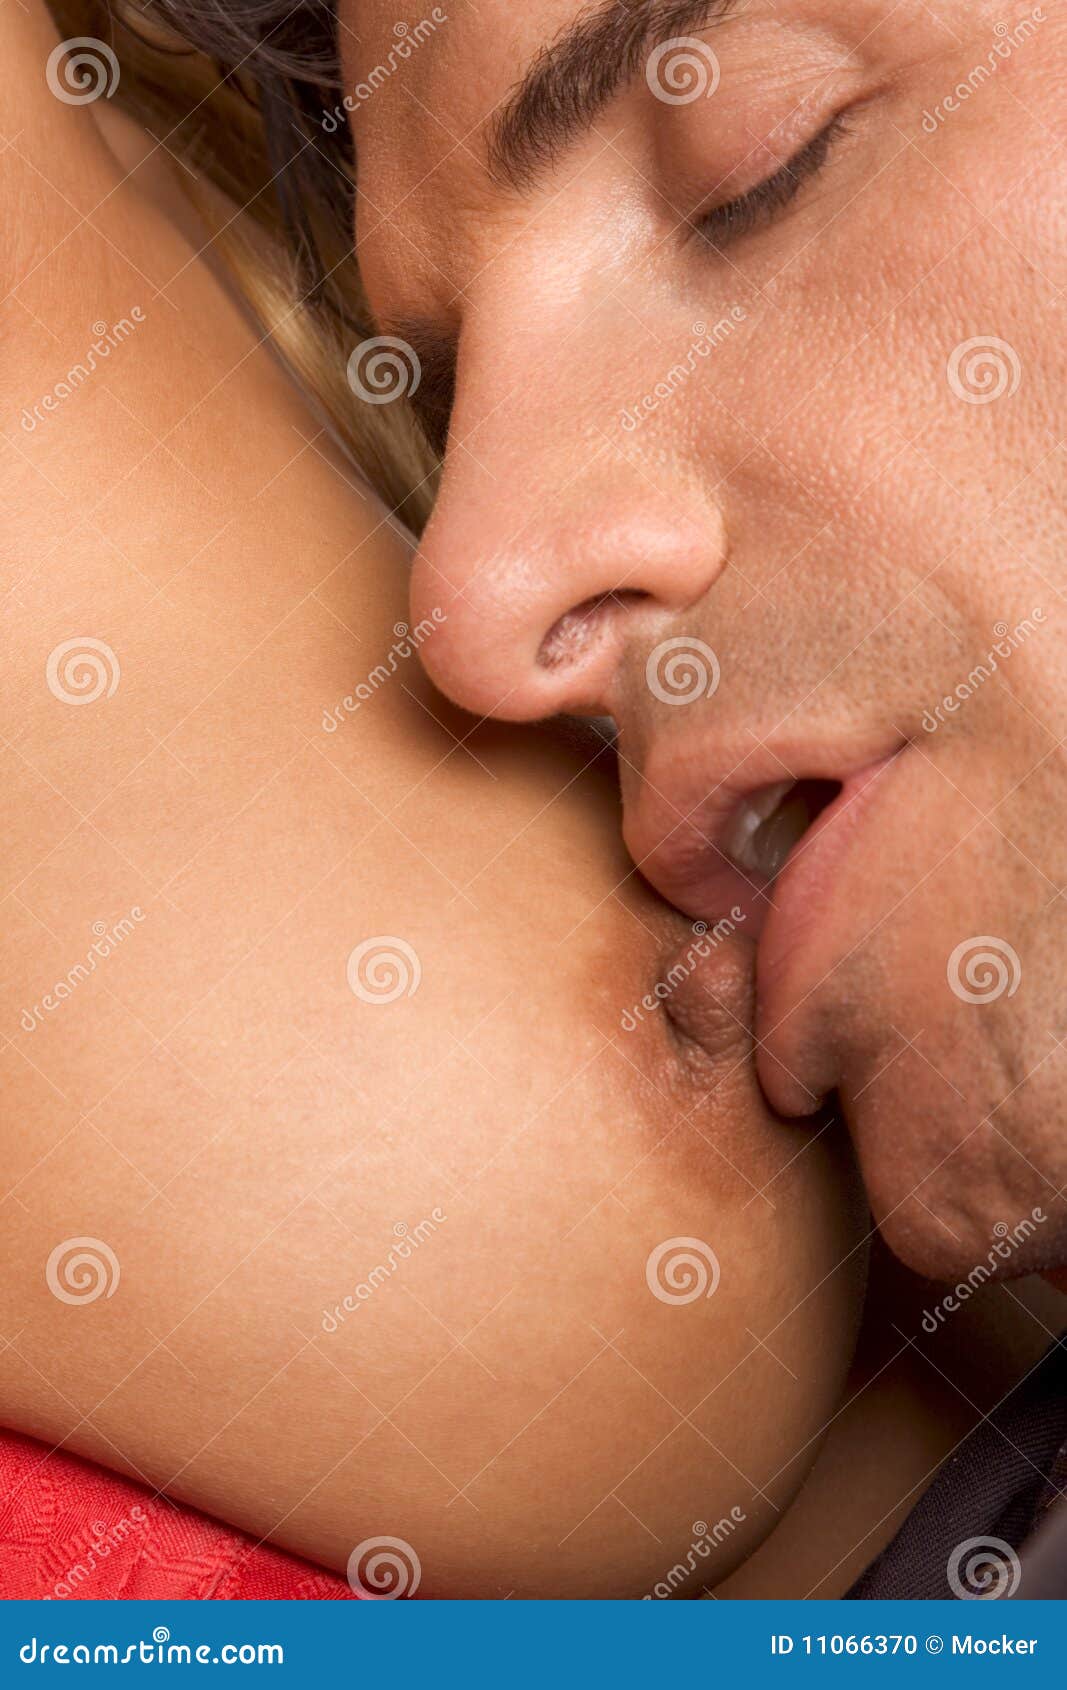 Boobs nipple kiss